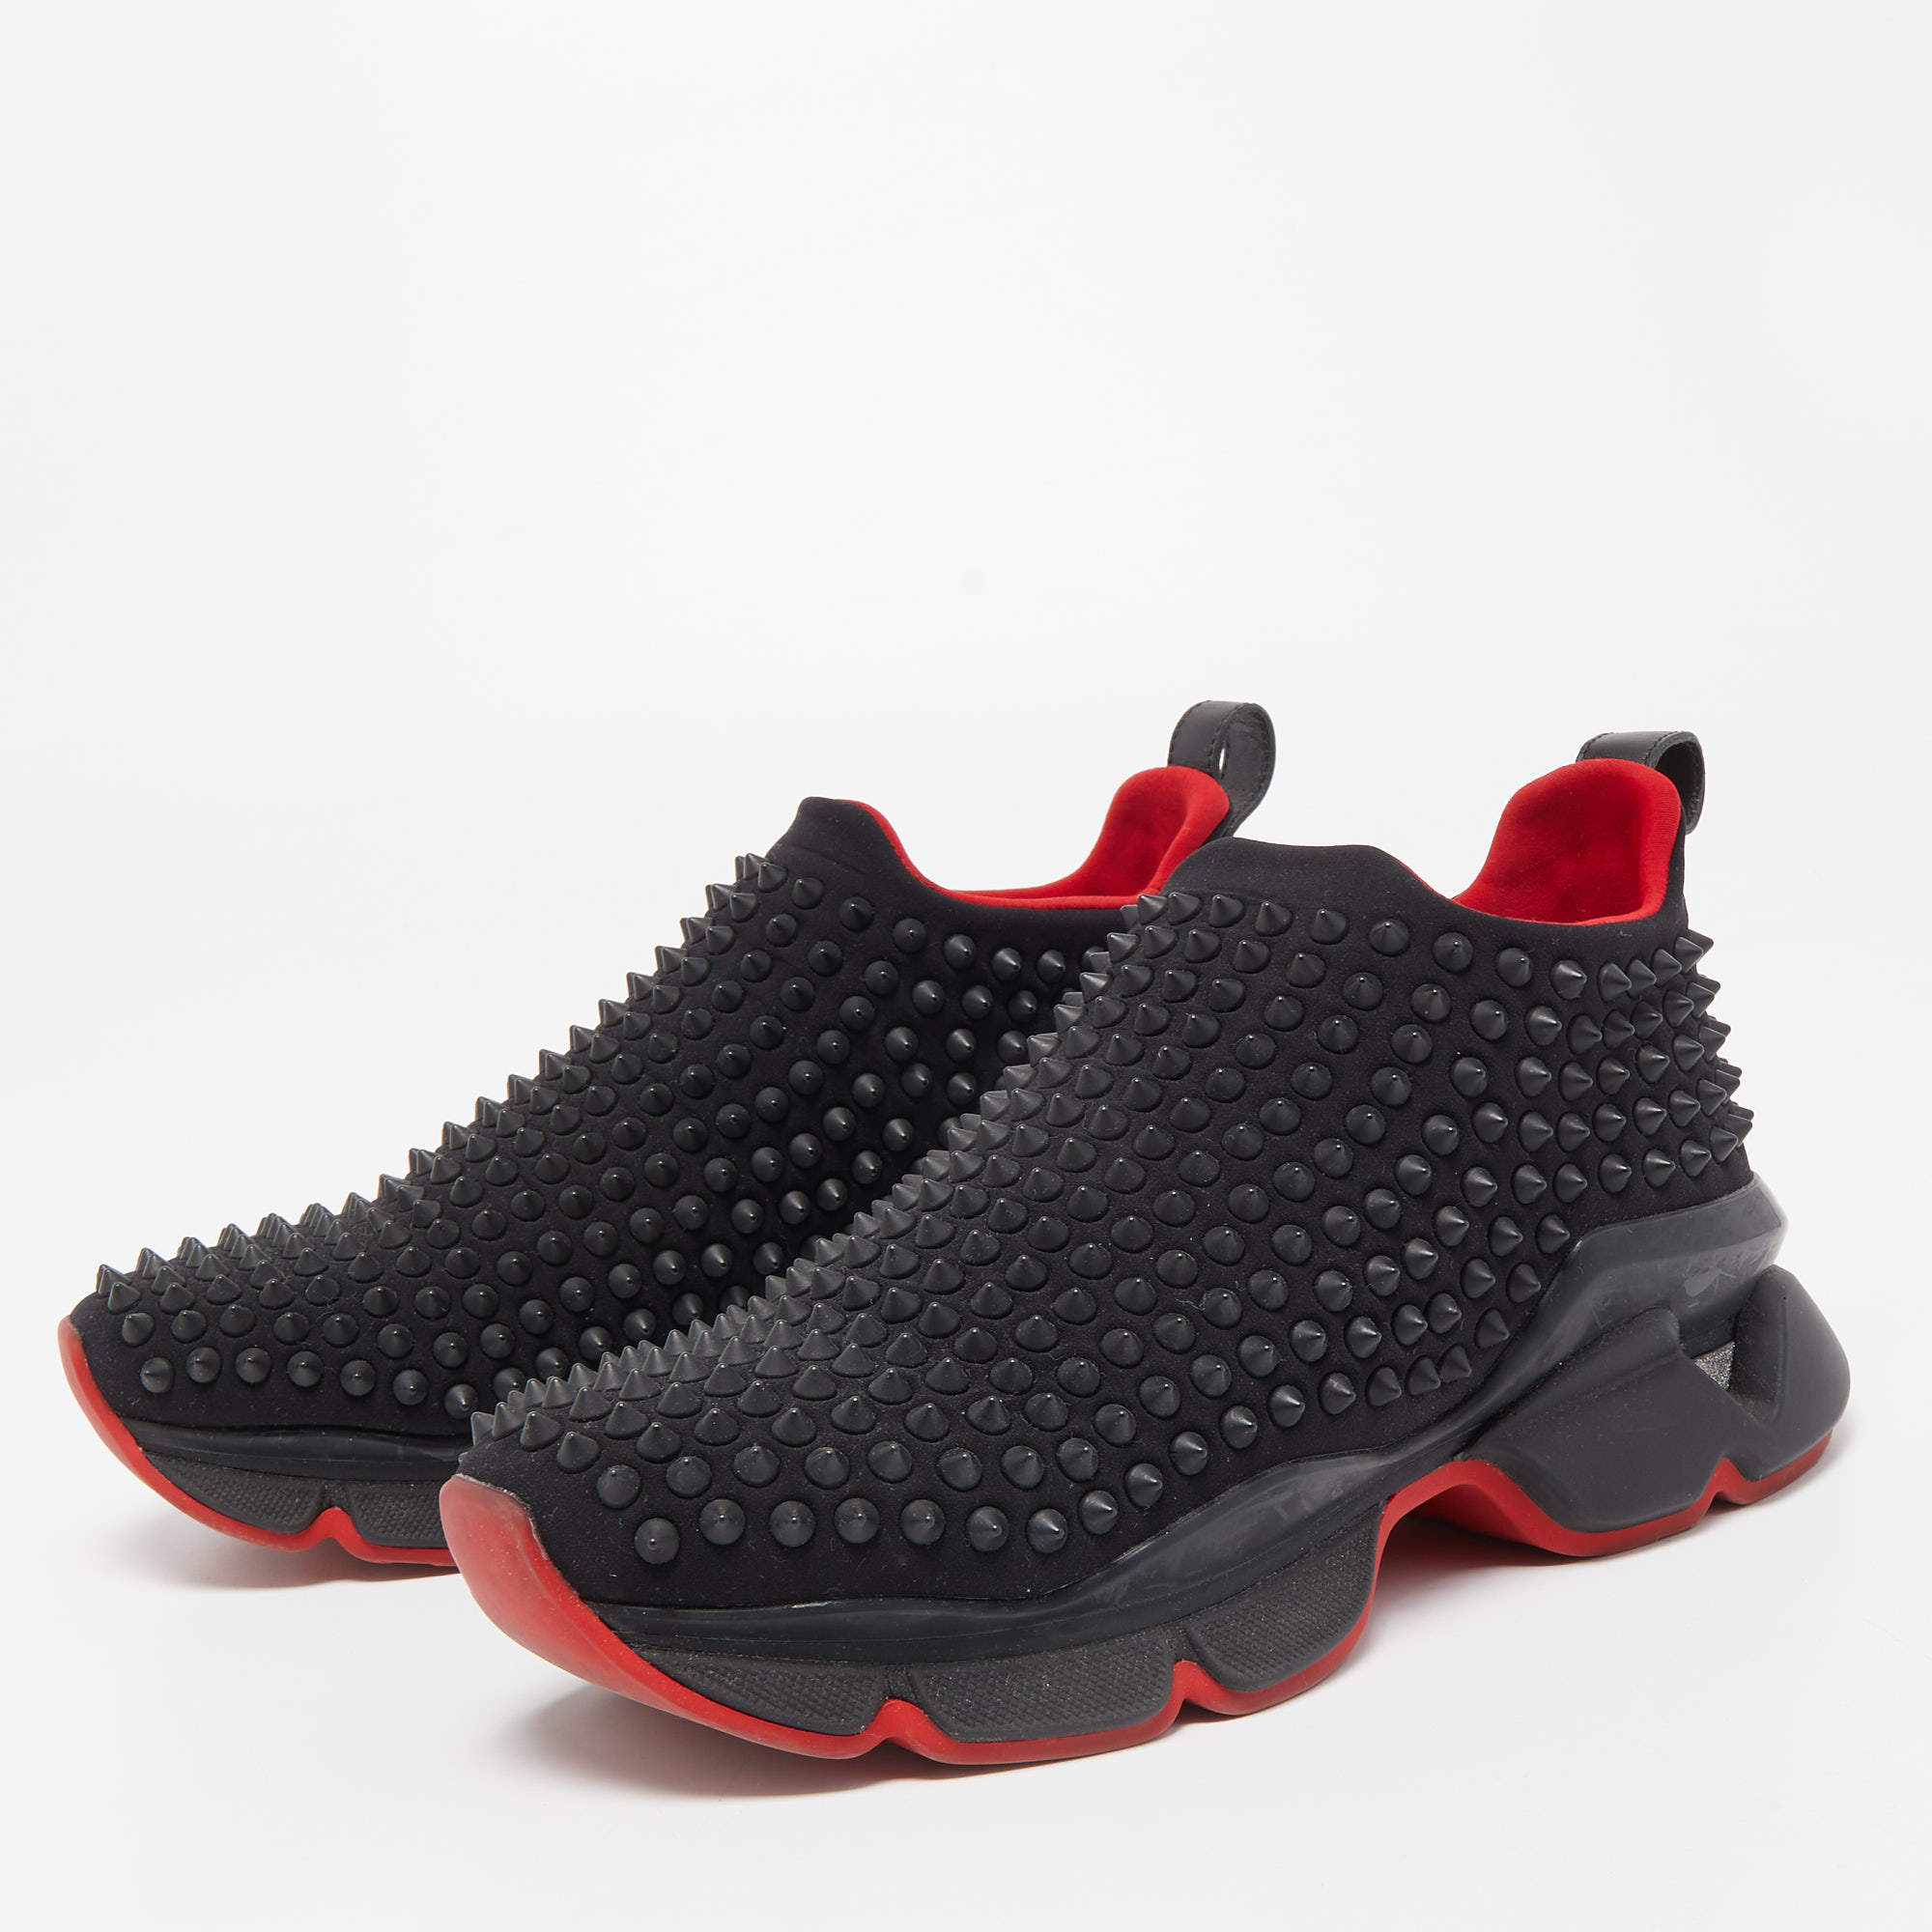 Christian Louboutin Black Fabric Spike Sock Sneakers Size 37